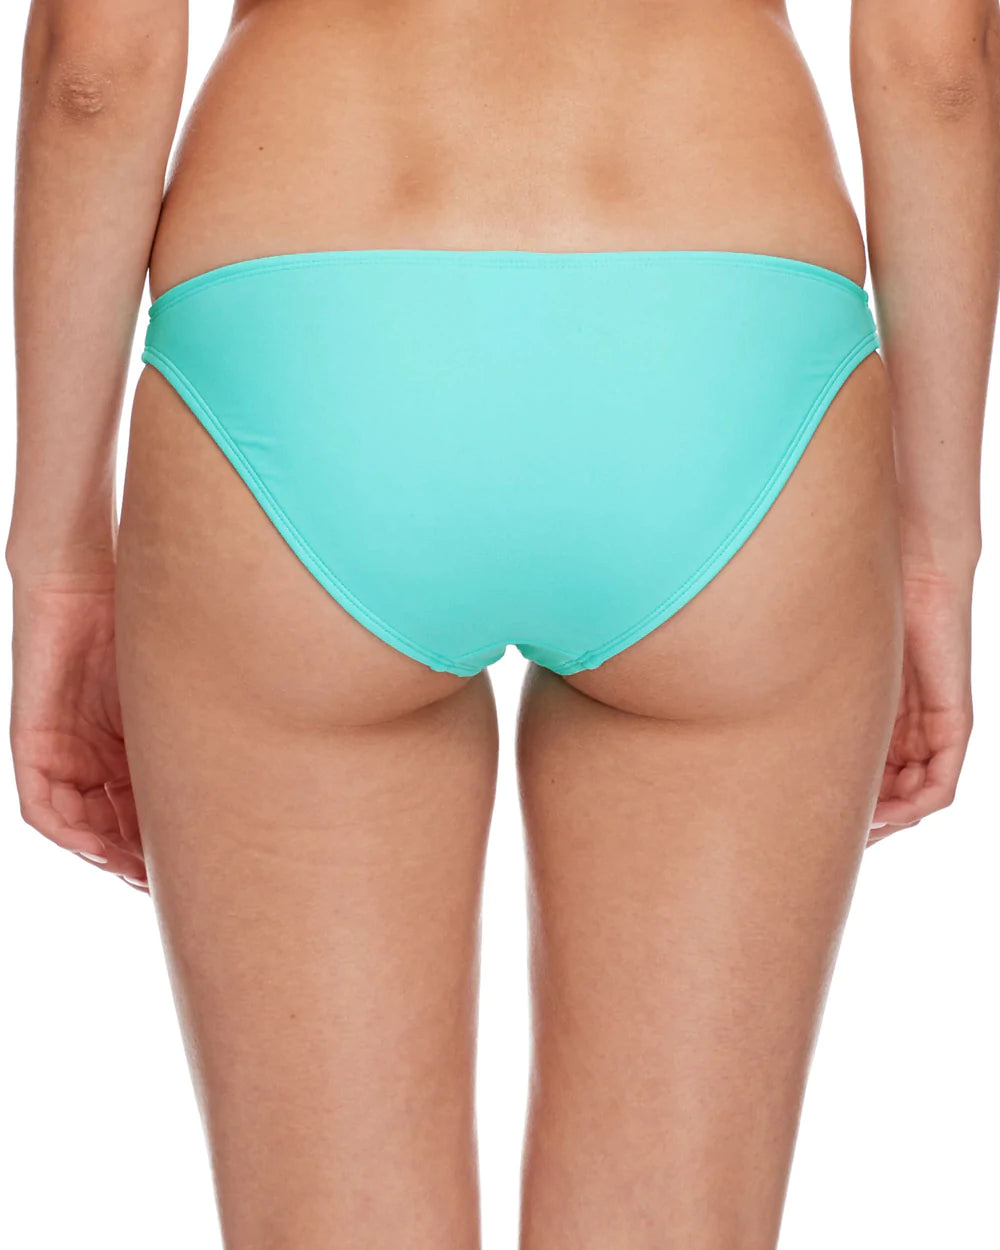 Turquoise Body Glove Bikini Bottom